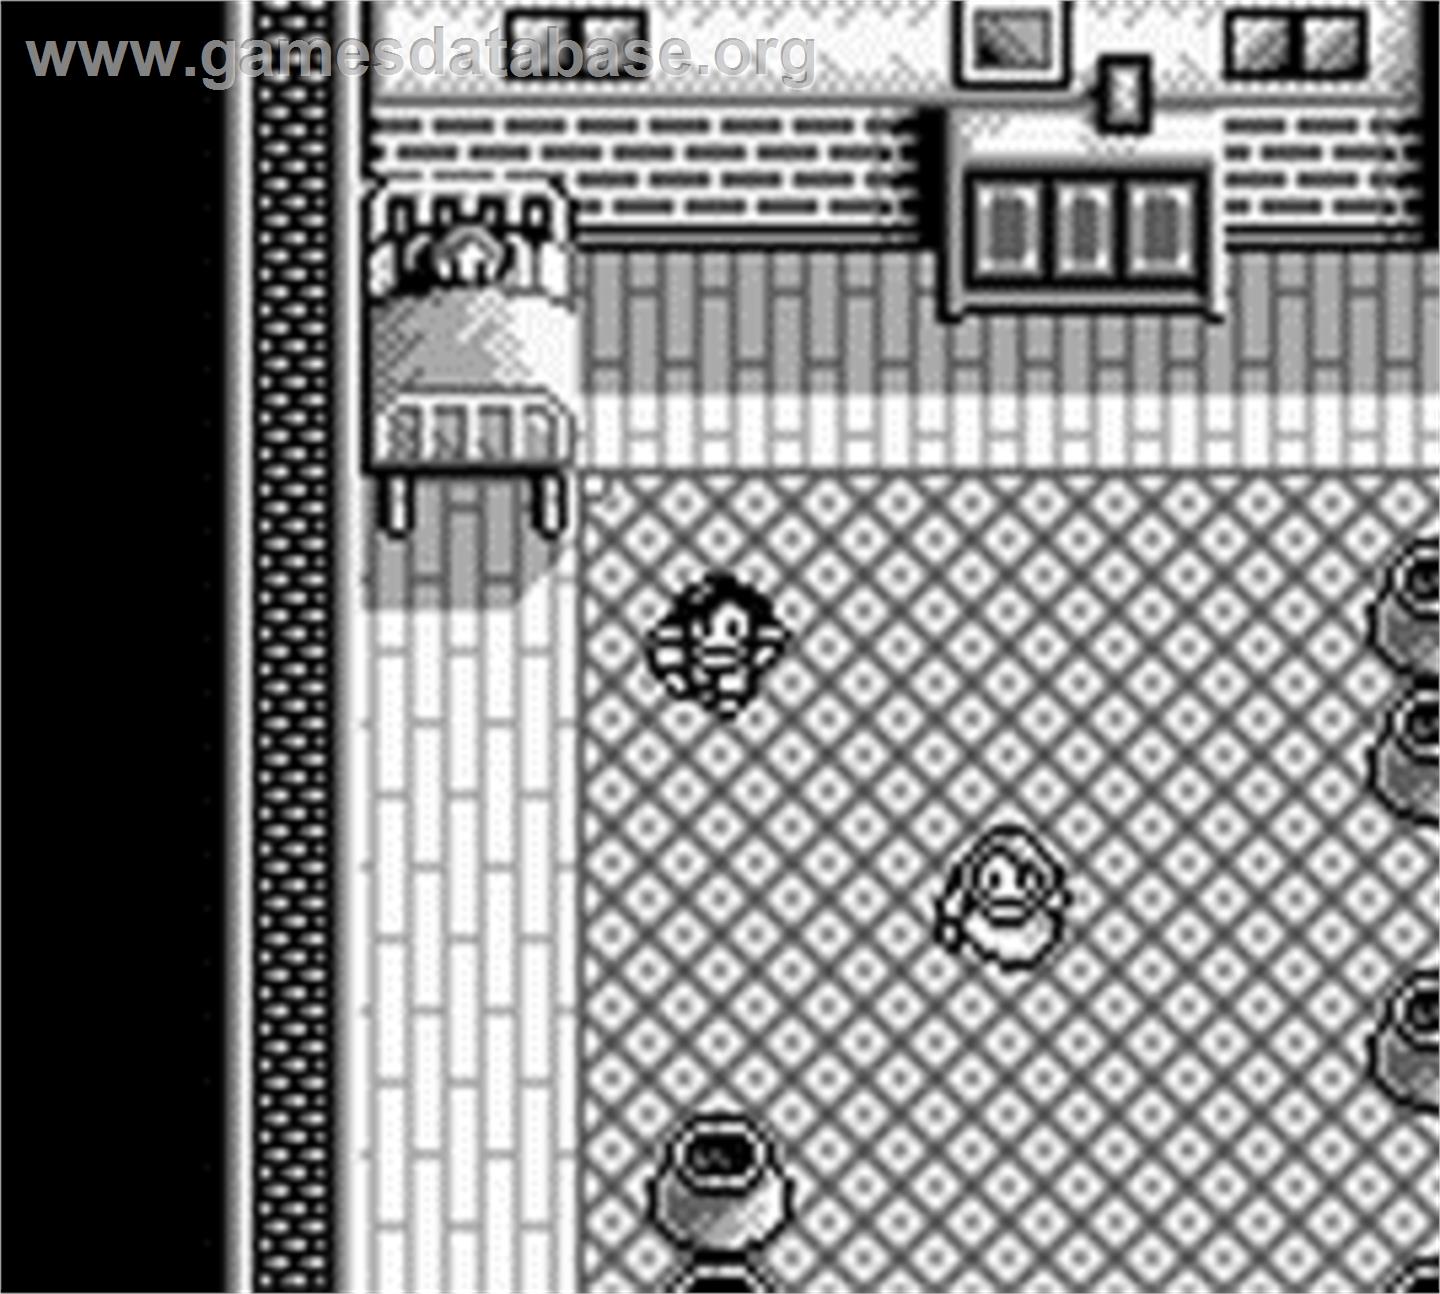 Aretha 3 - Nintendo Game Boy - Artwork - In Game